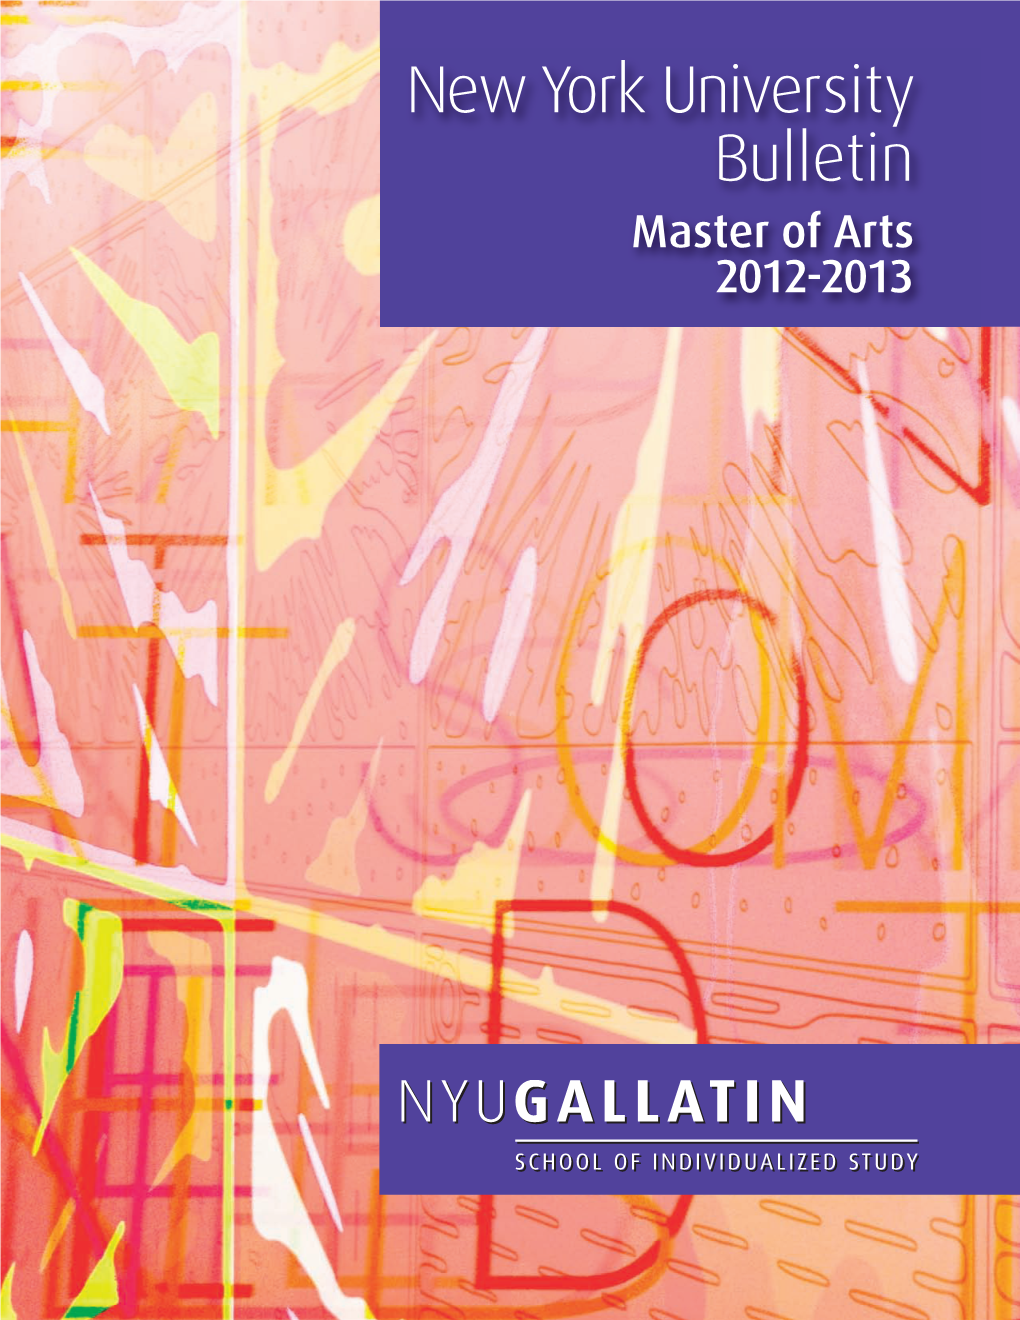 New York University Bulletin Master of Arts 2012-2013 Newyork University Bulletin Master of Arts 2012-2013 NYU Gallatin School of Individualized Study